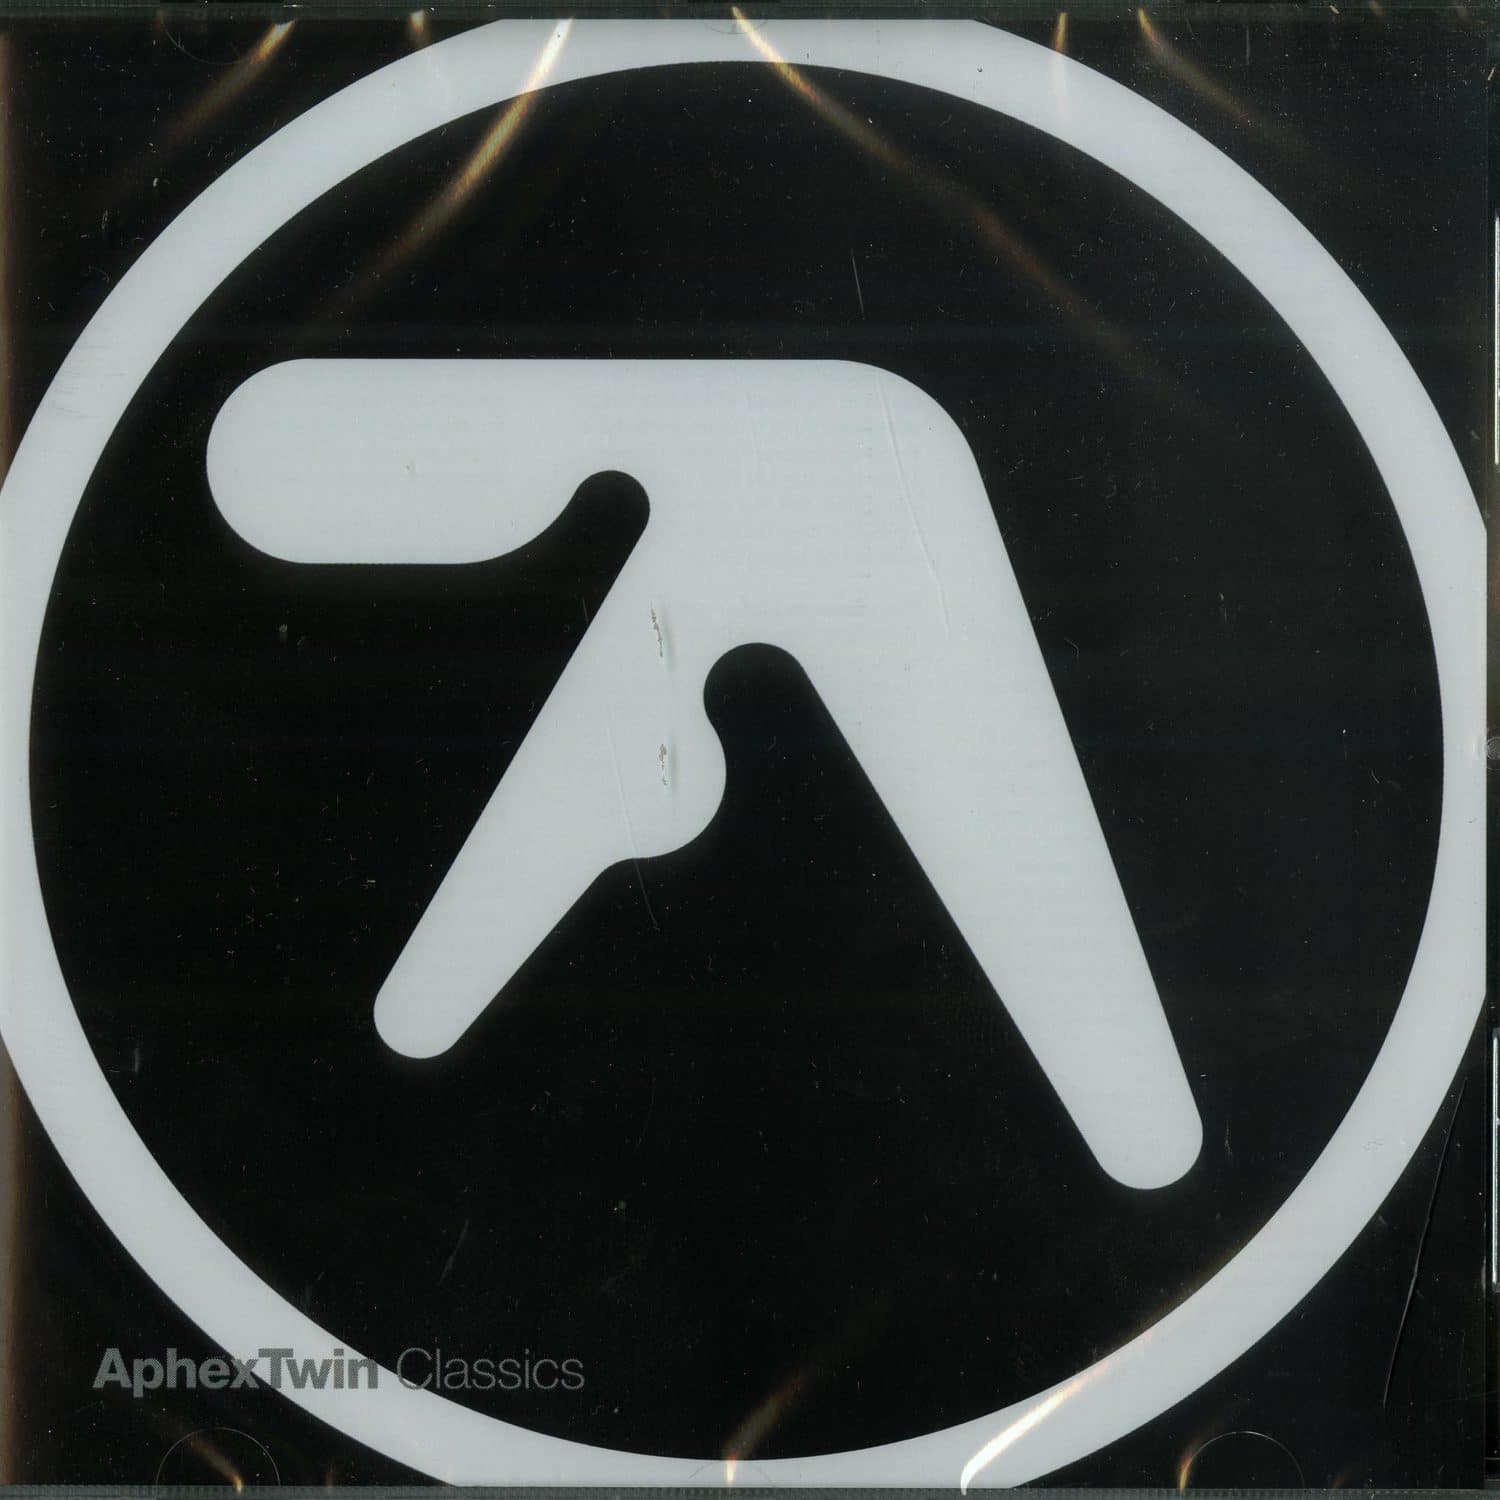 Aphex Twin - CLASSICS 